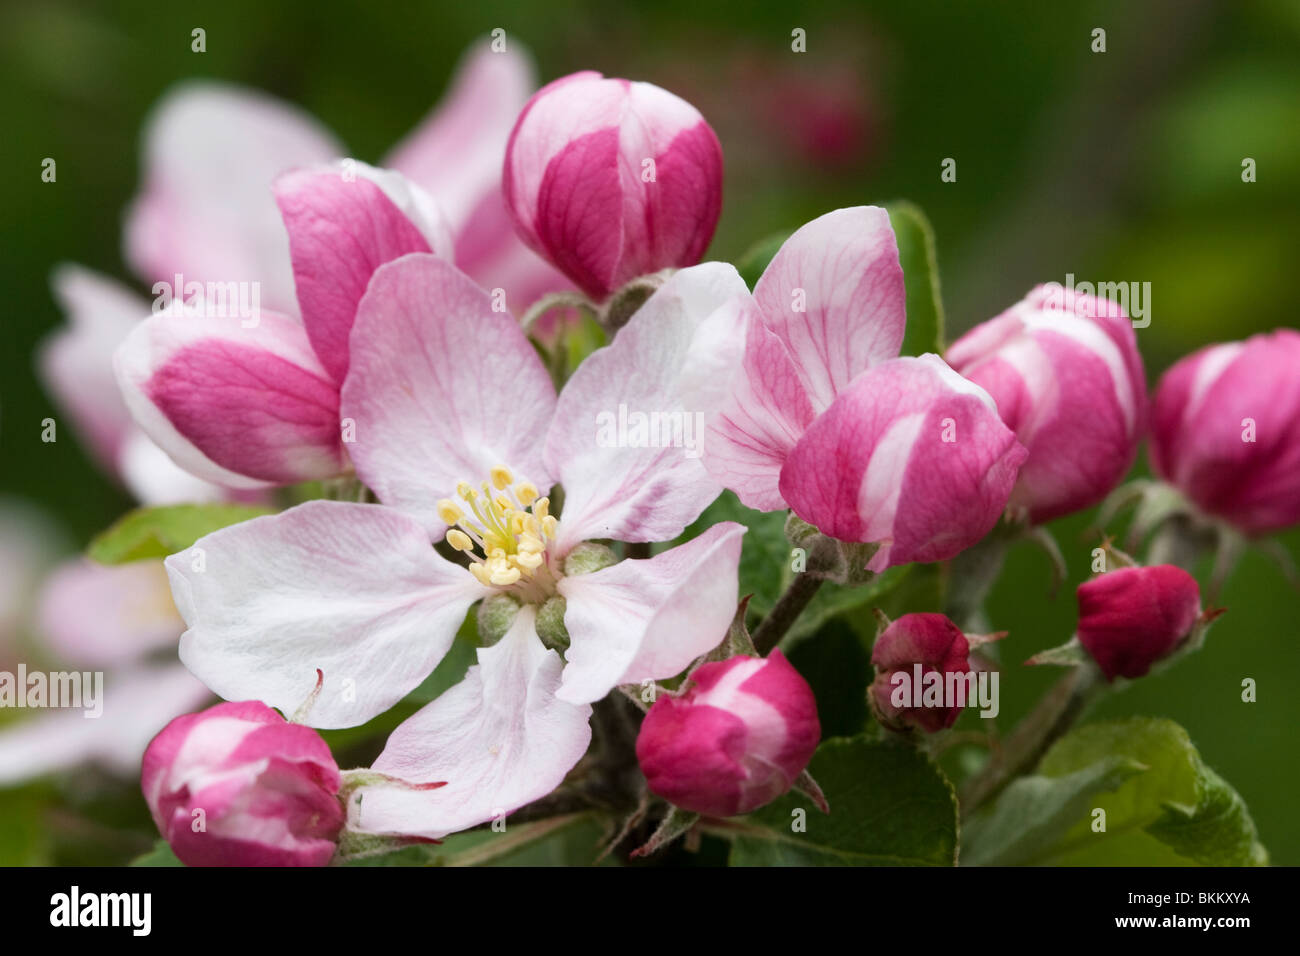 Blossom of the apple tree 'Rubinette', at Horfield Organic Community Orchard, Bristol. Stock Photo